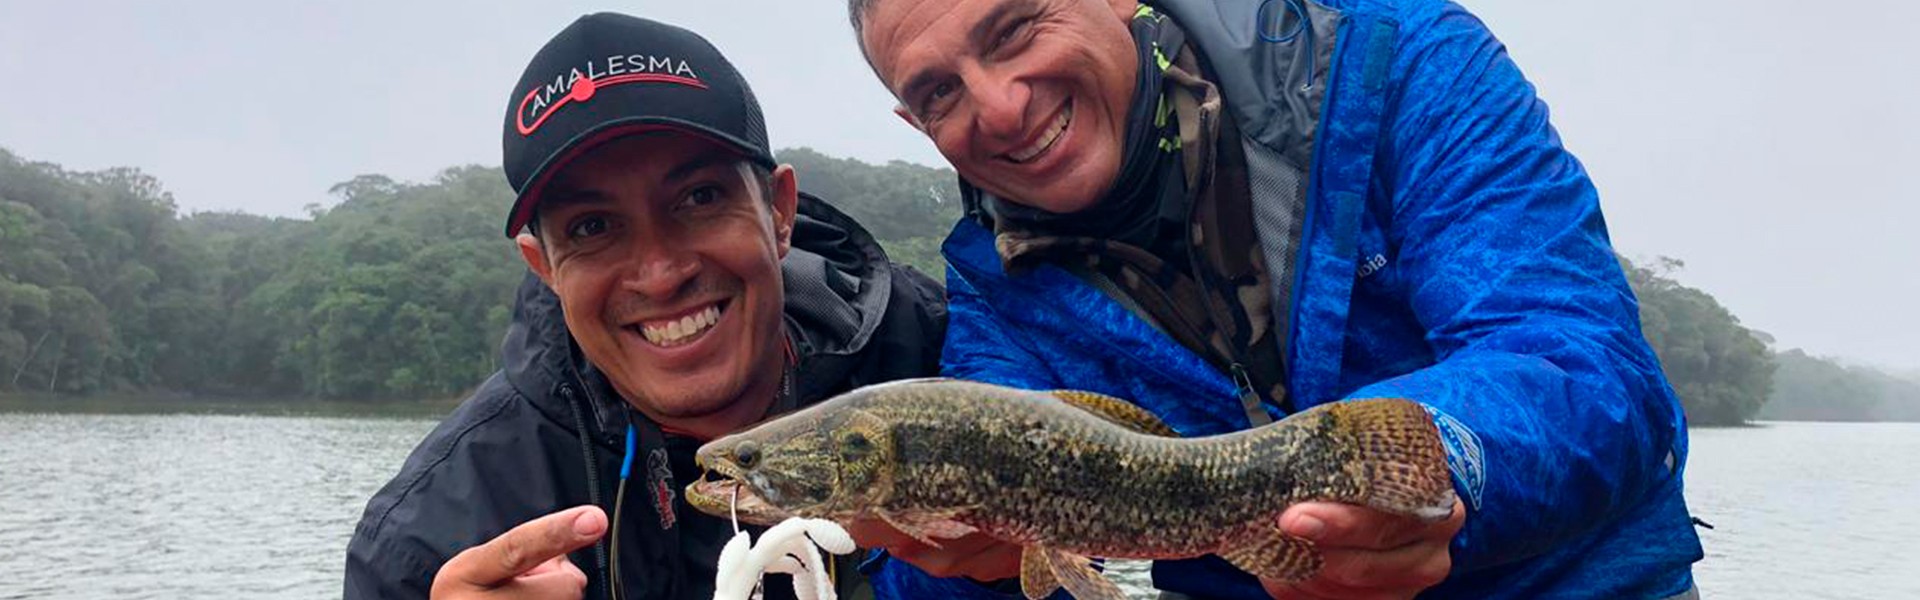 Pasión Por La Pesca tem episódio inédito sobre pesca de traíras